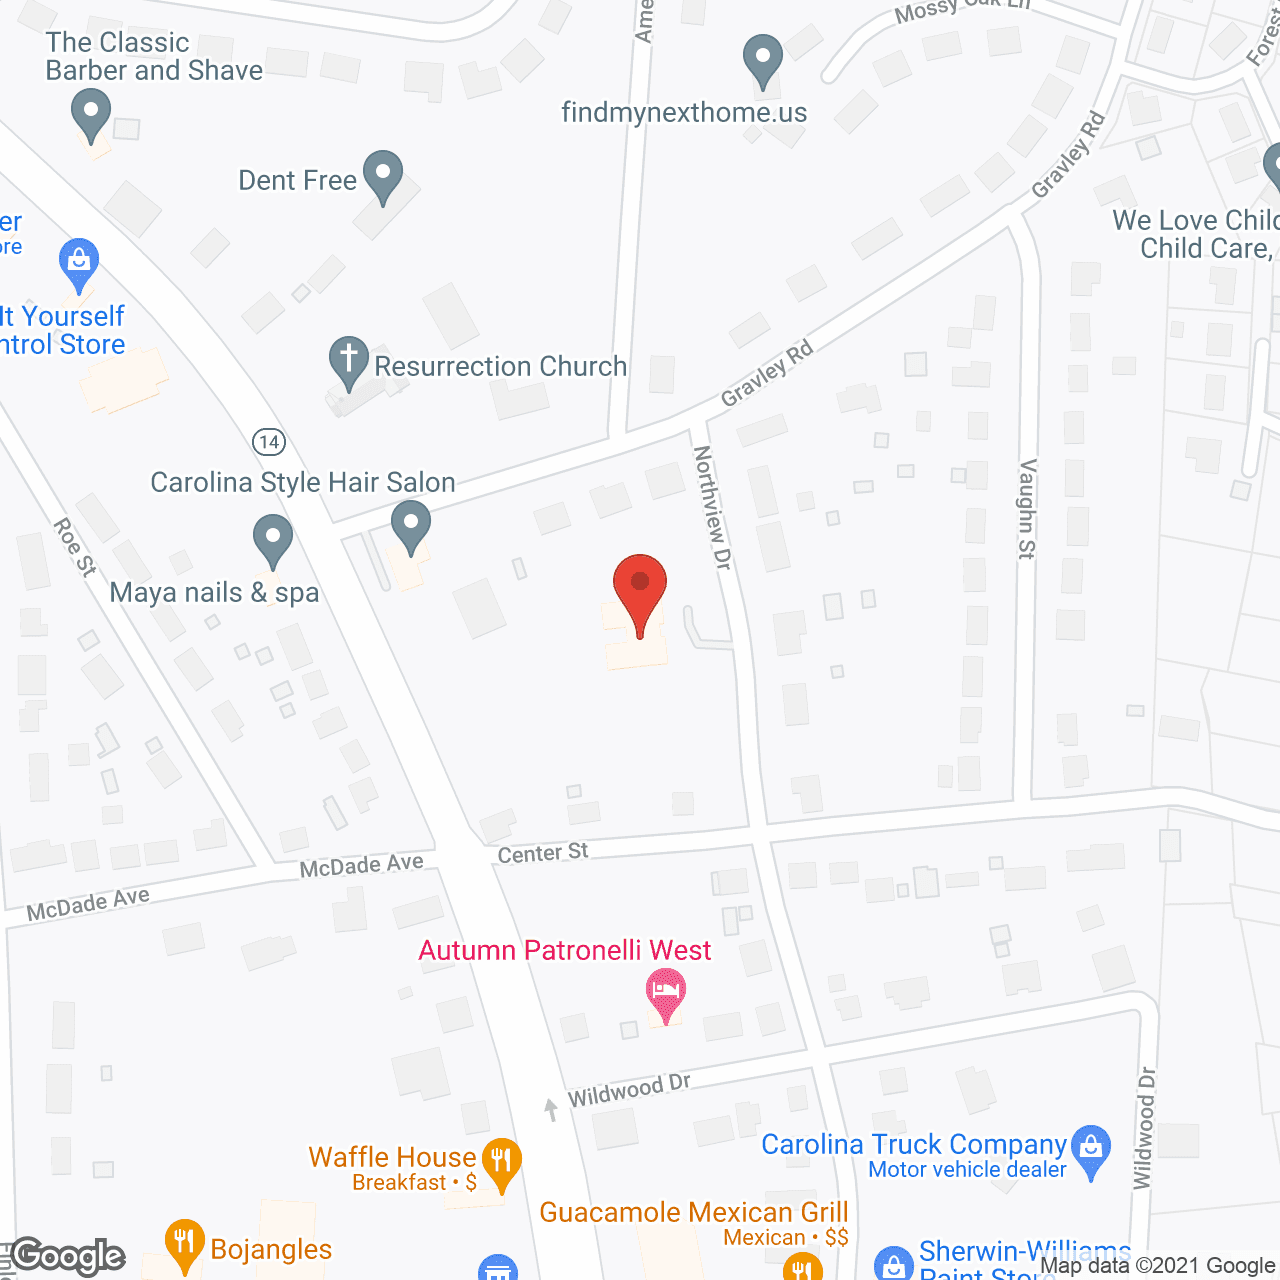 Bayberry Retirement Inn in google map